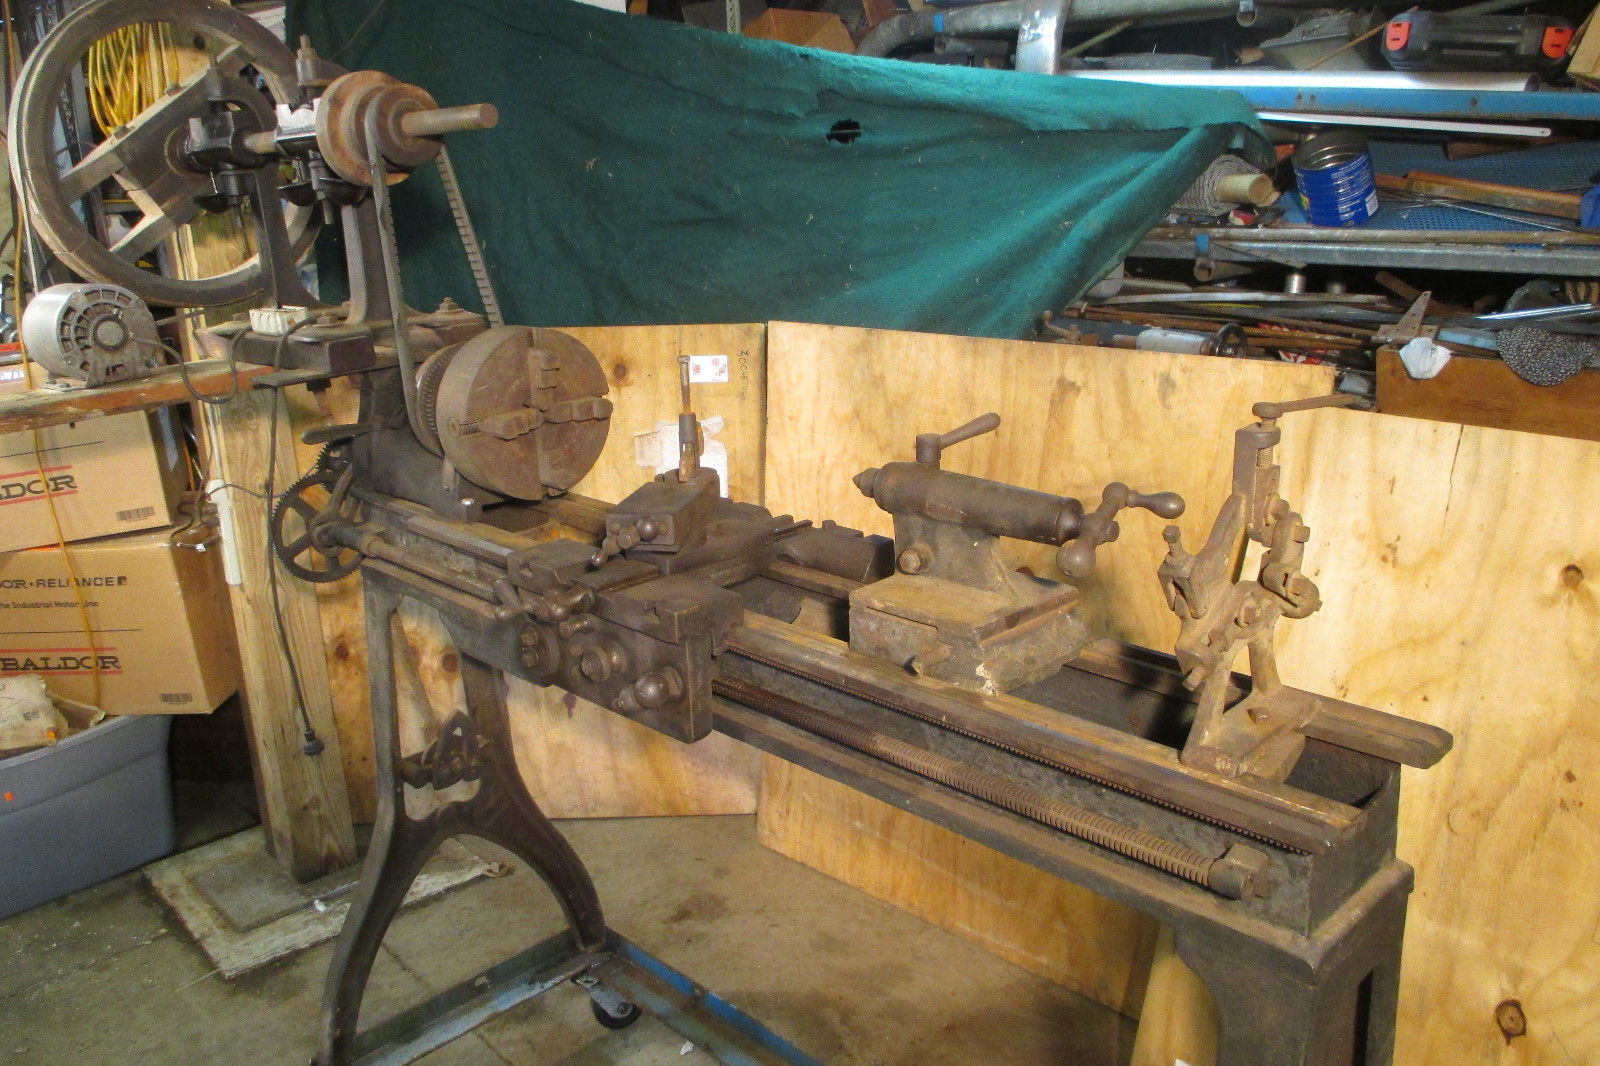 http://antiquemachinery.com/images/000-sheppard-lathe-2.JPG/